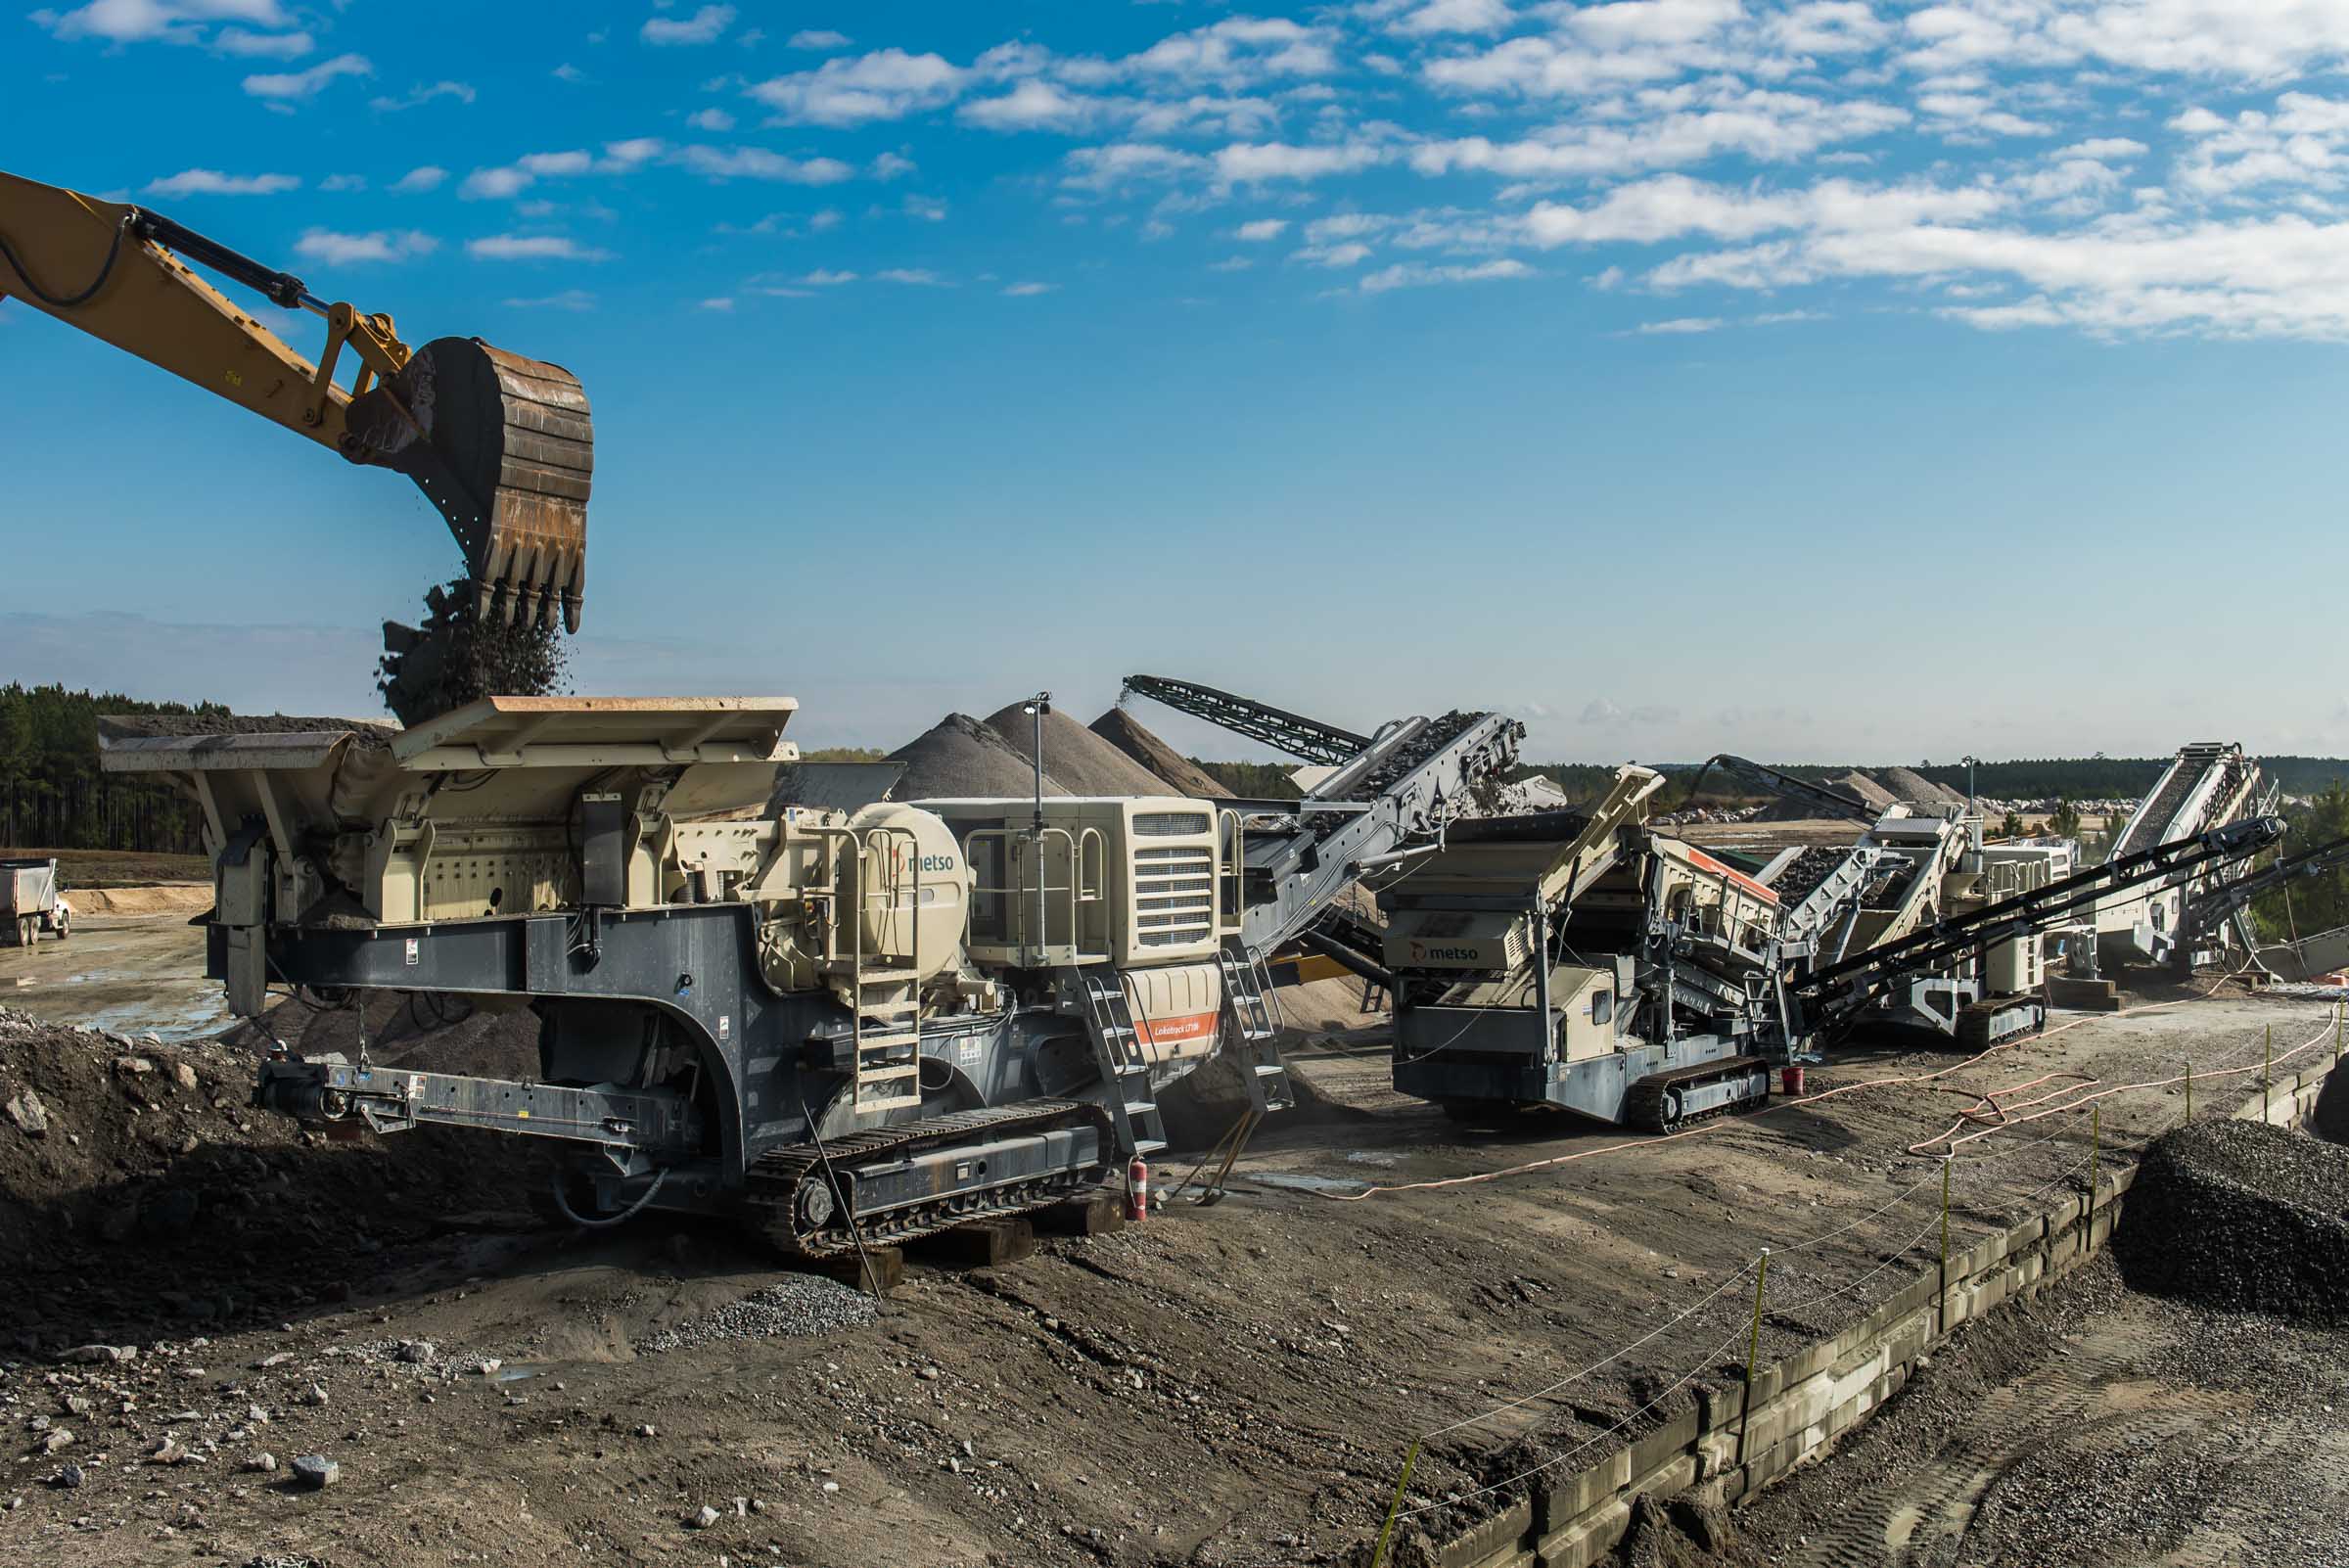 Metso crushing equipment at C & H Paving quarry